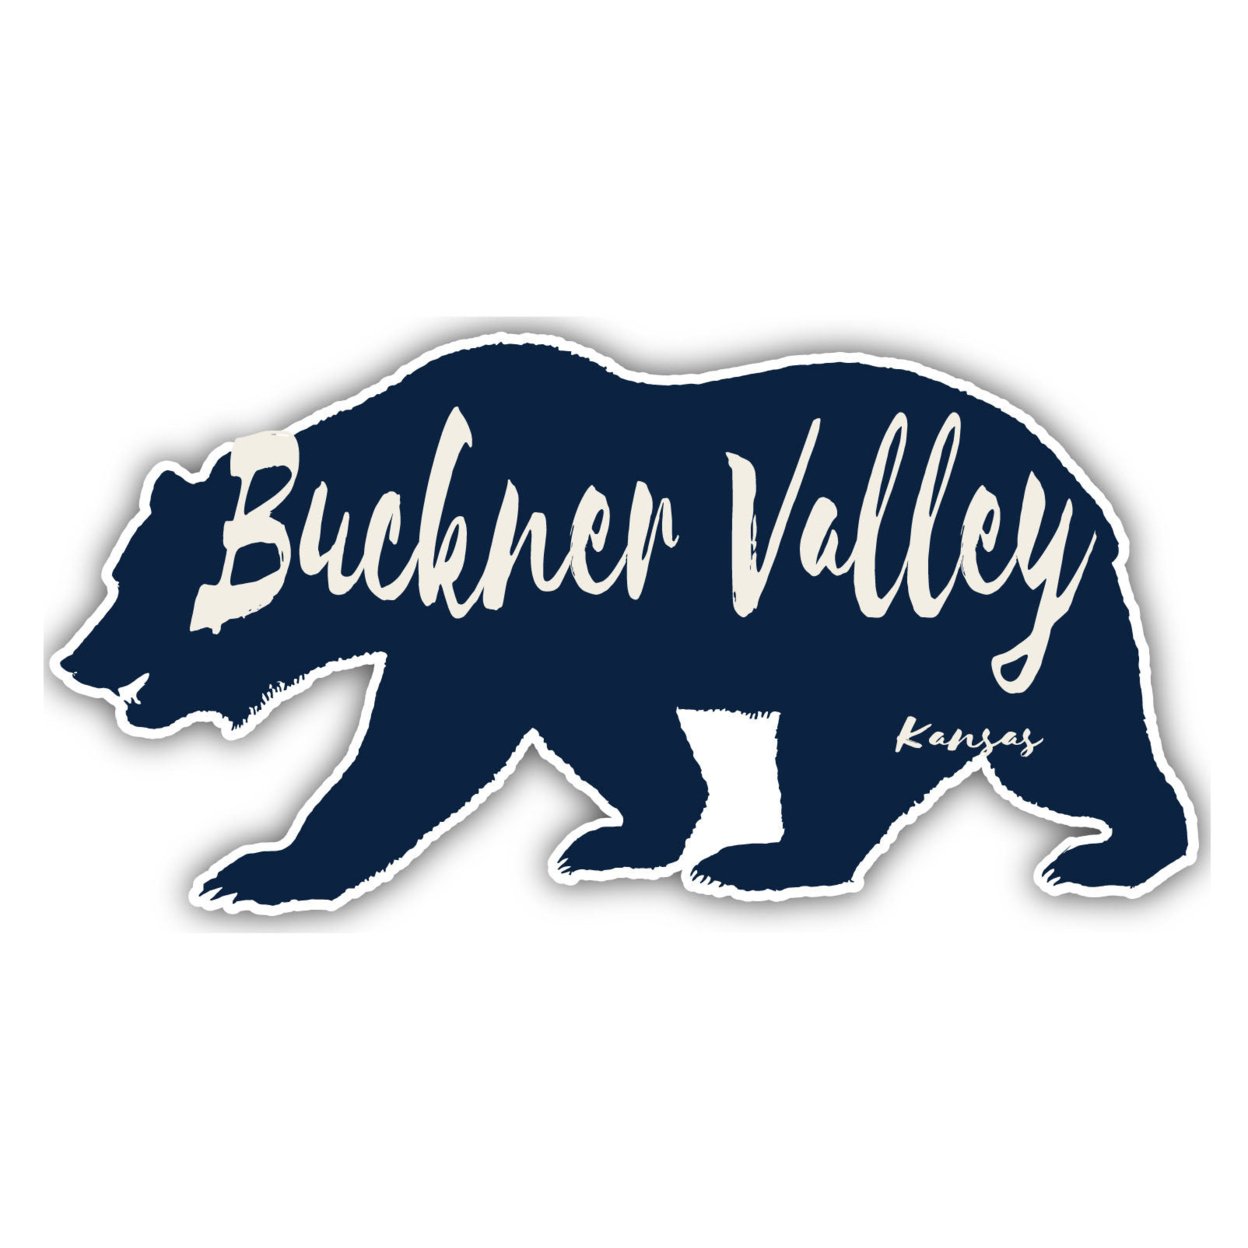 Buckner Valley Kansas Souvenir Decorative Stickers (Choose Theme And Size) - 4-Pack, 8-Inch, Bear